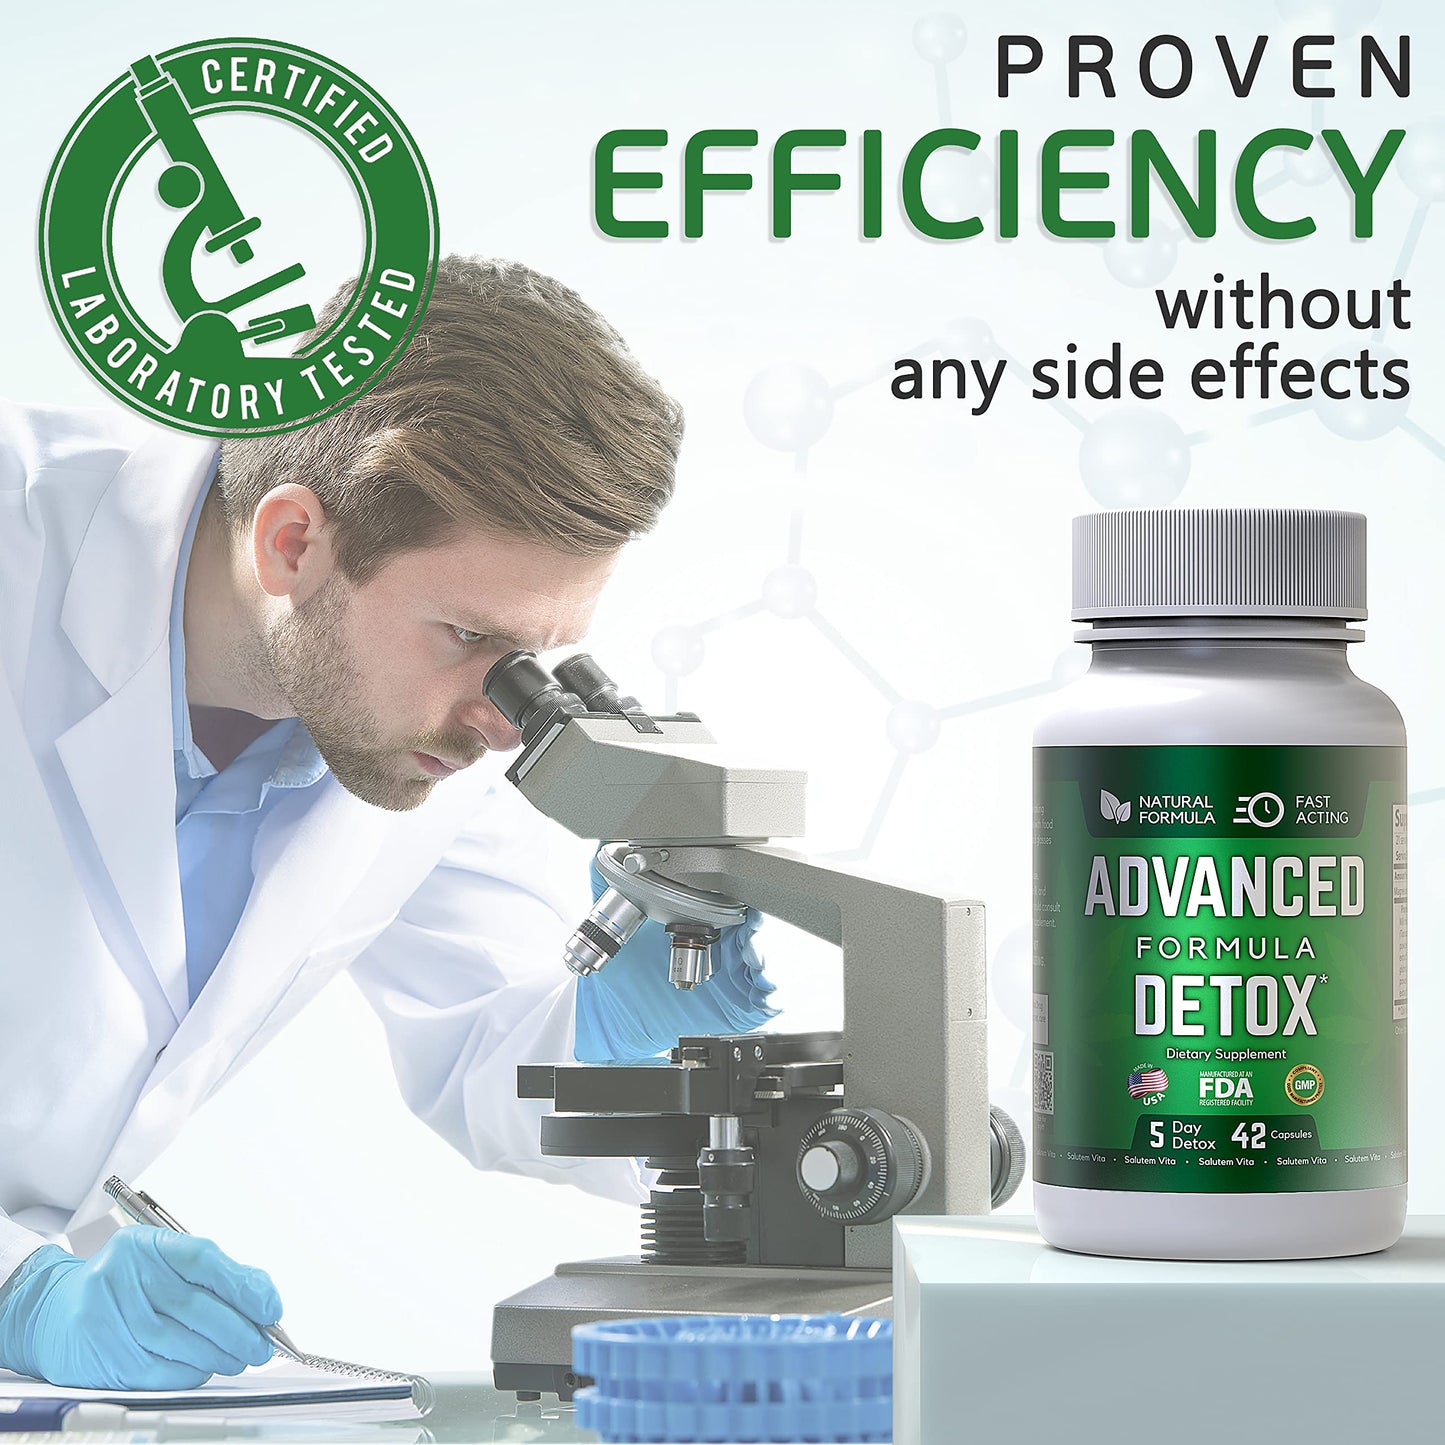 Salutem Vita Advance Formula Detox - Supplement for Toxin Removal